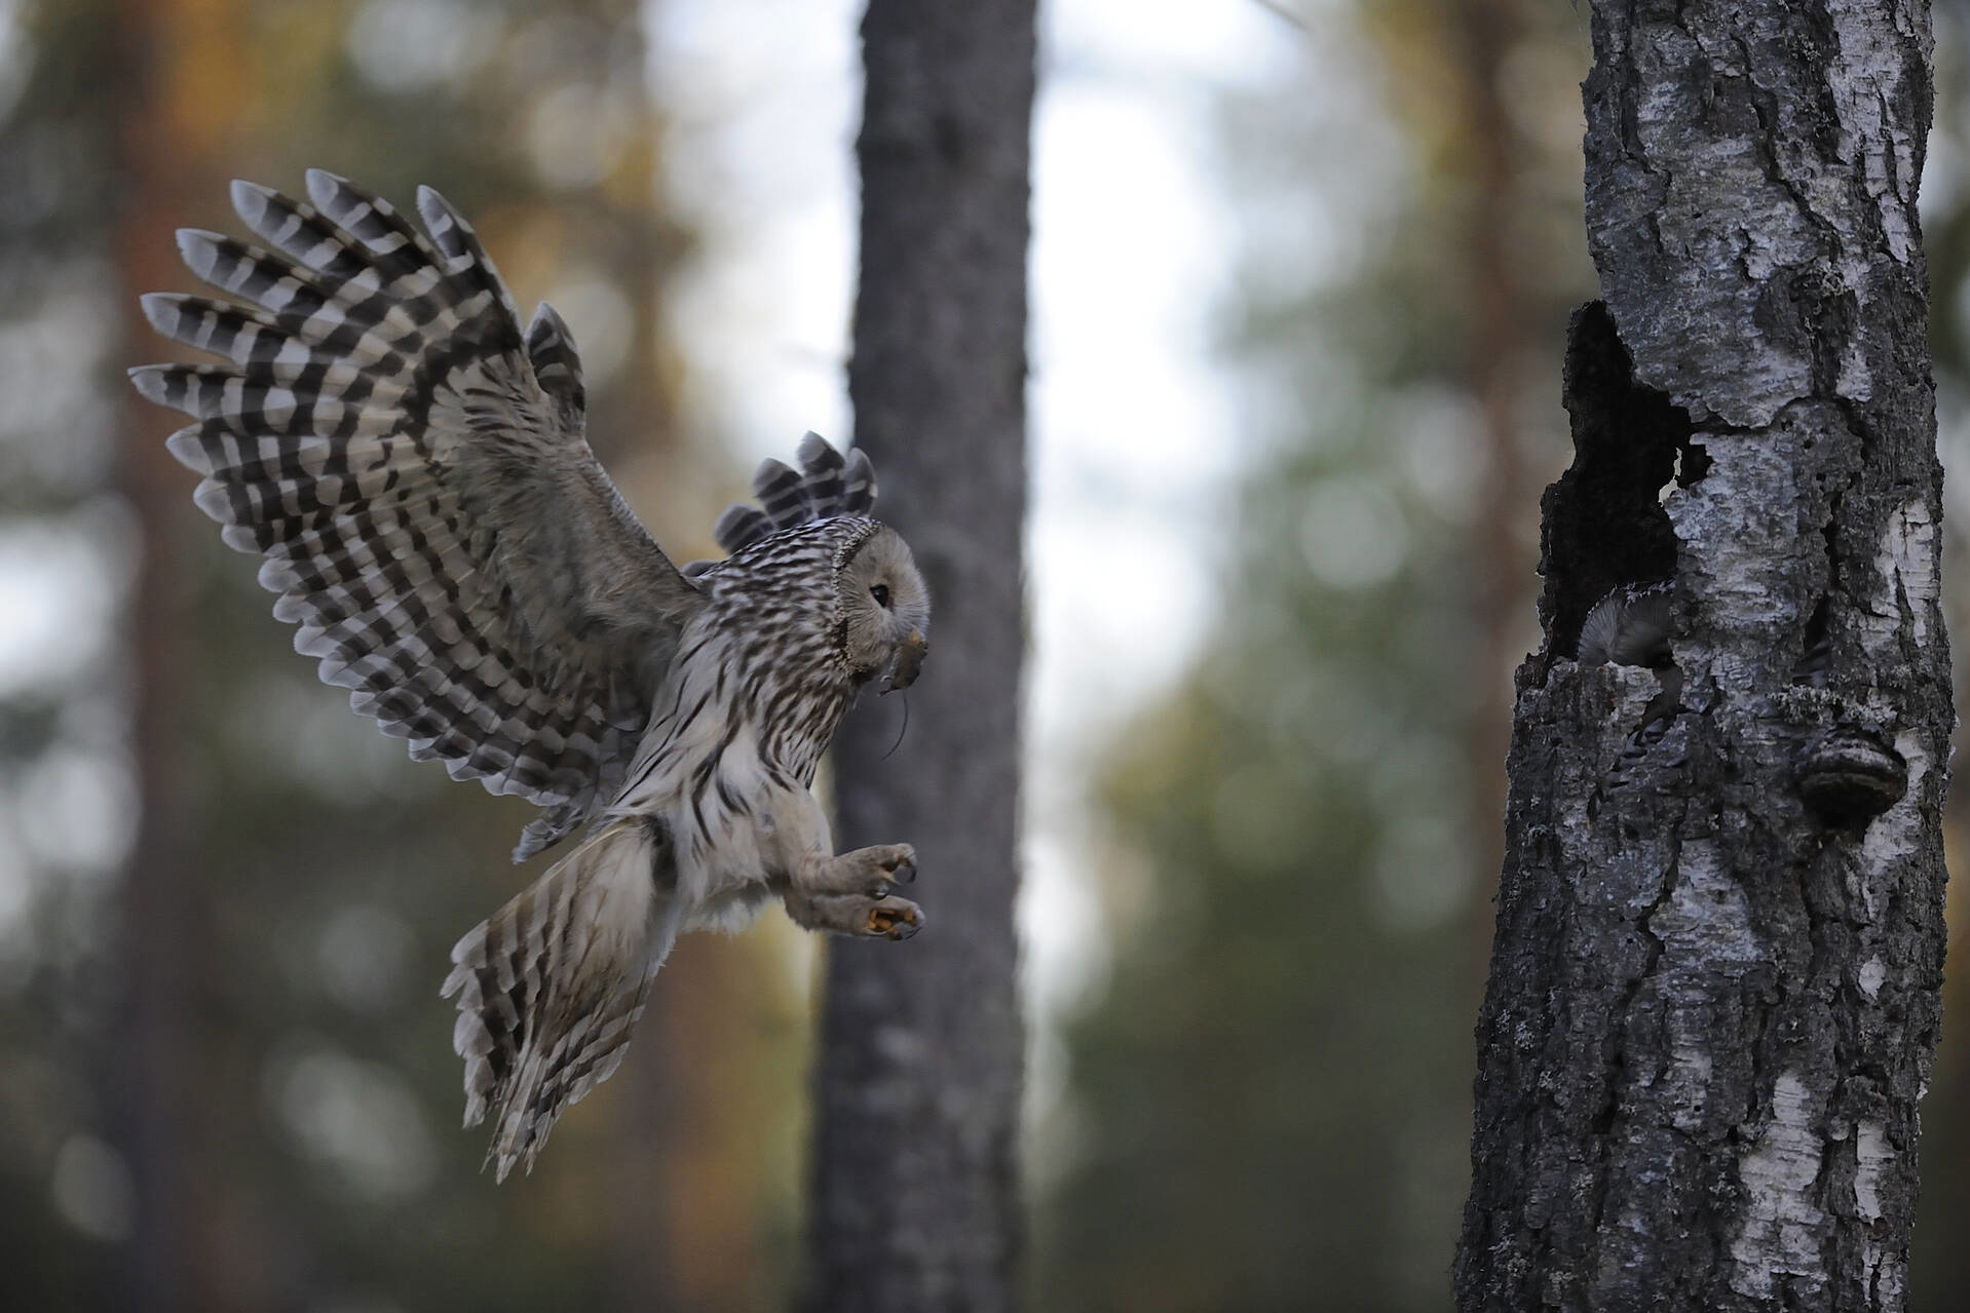 High biodiversity stump and owl